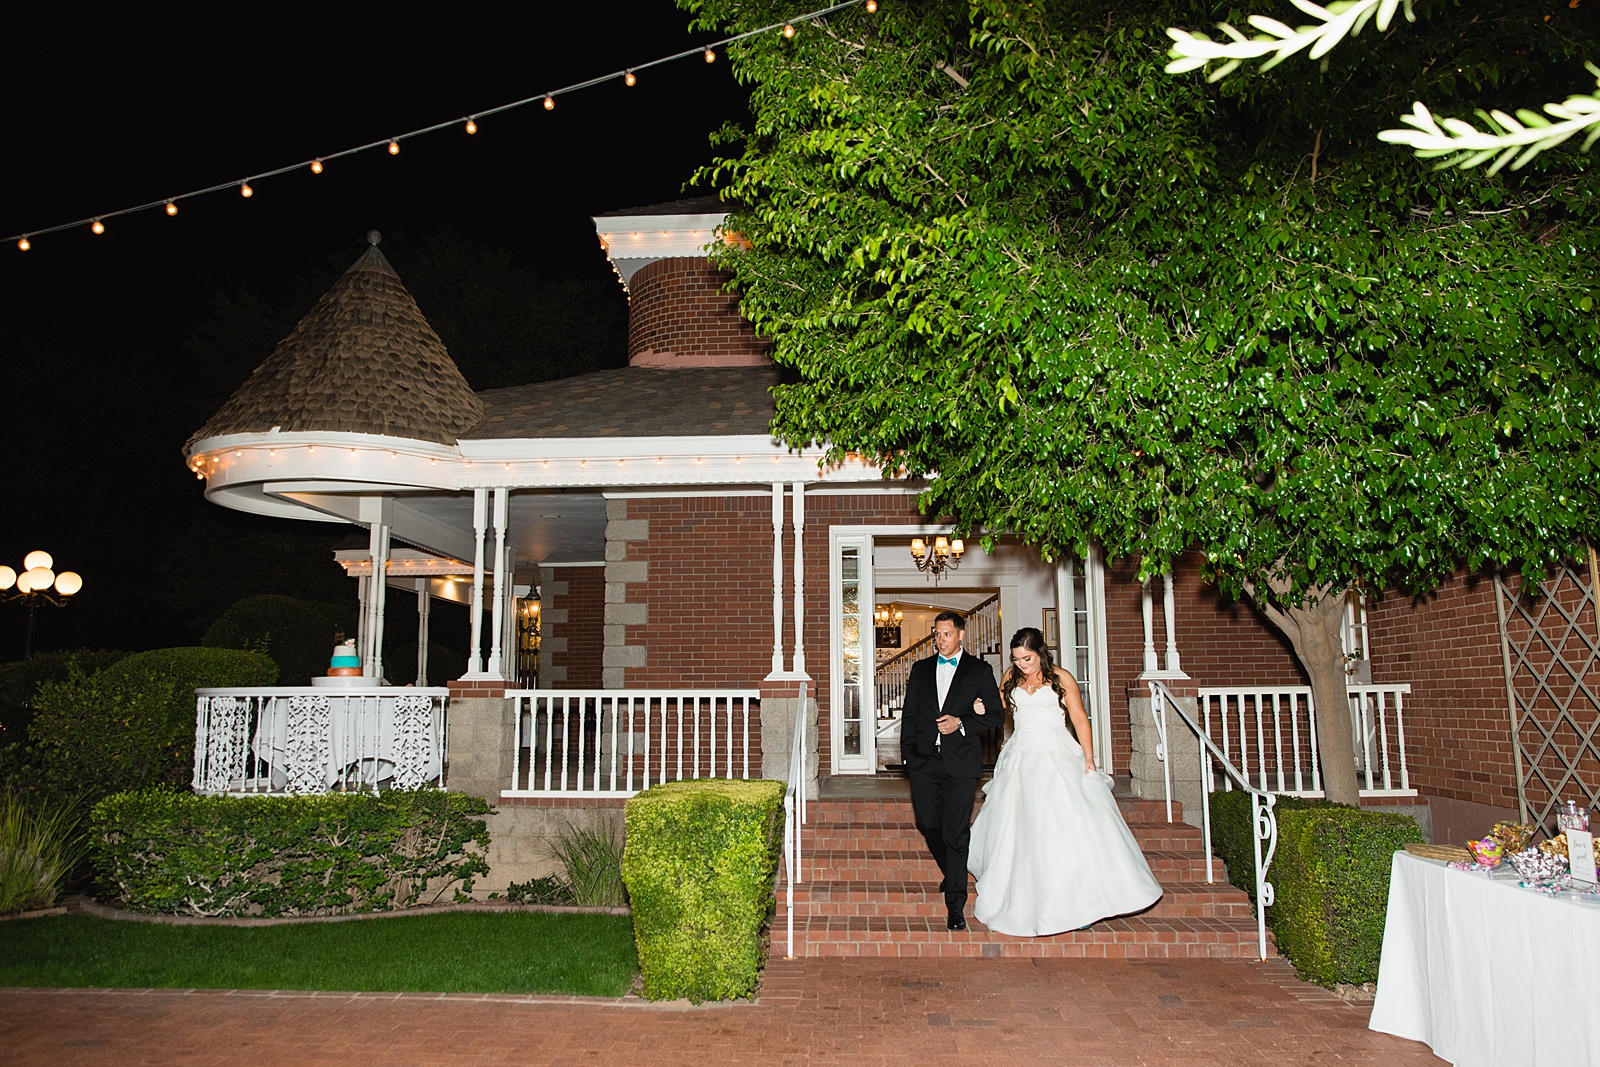 Couple's grand entrance at Stonebridge Manor wedding reception by Mesa wedding photographer PMA Photography.